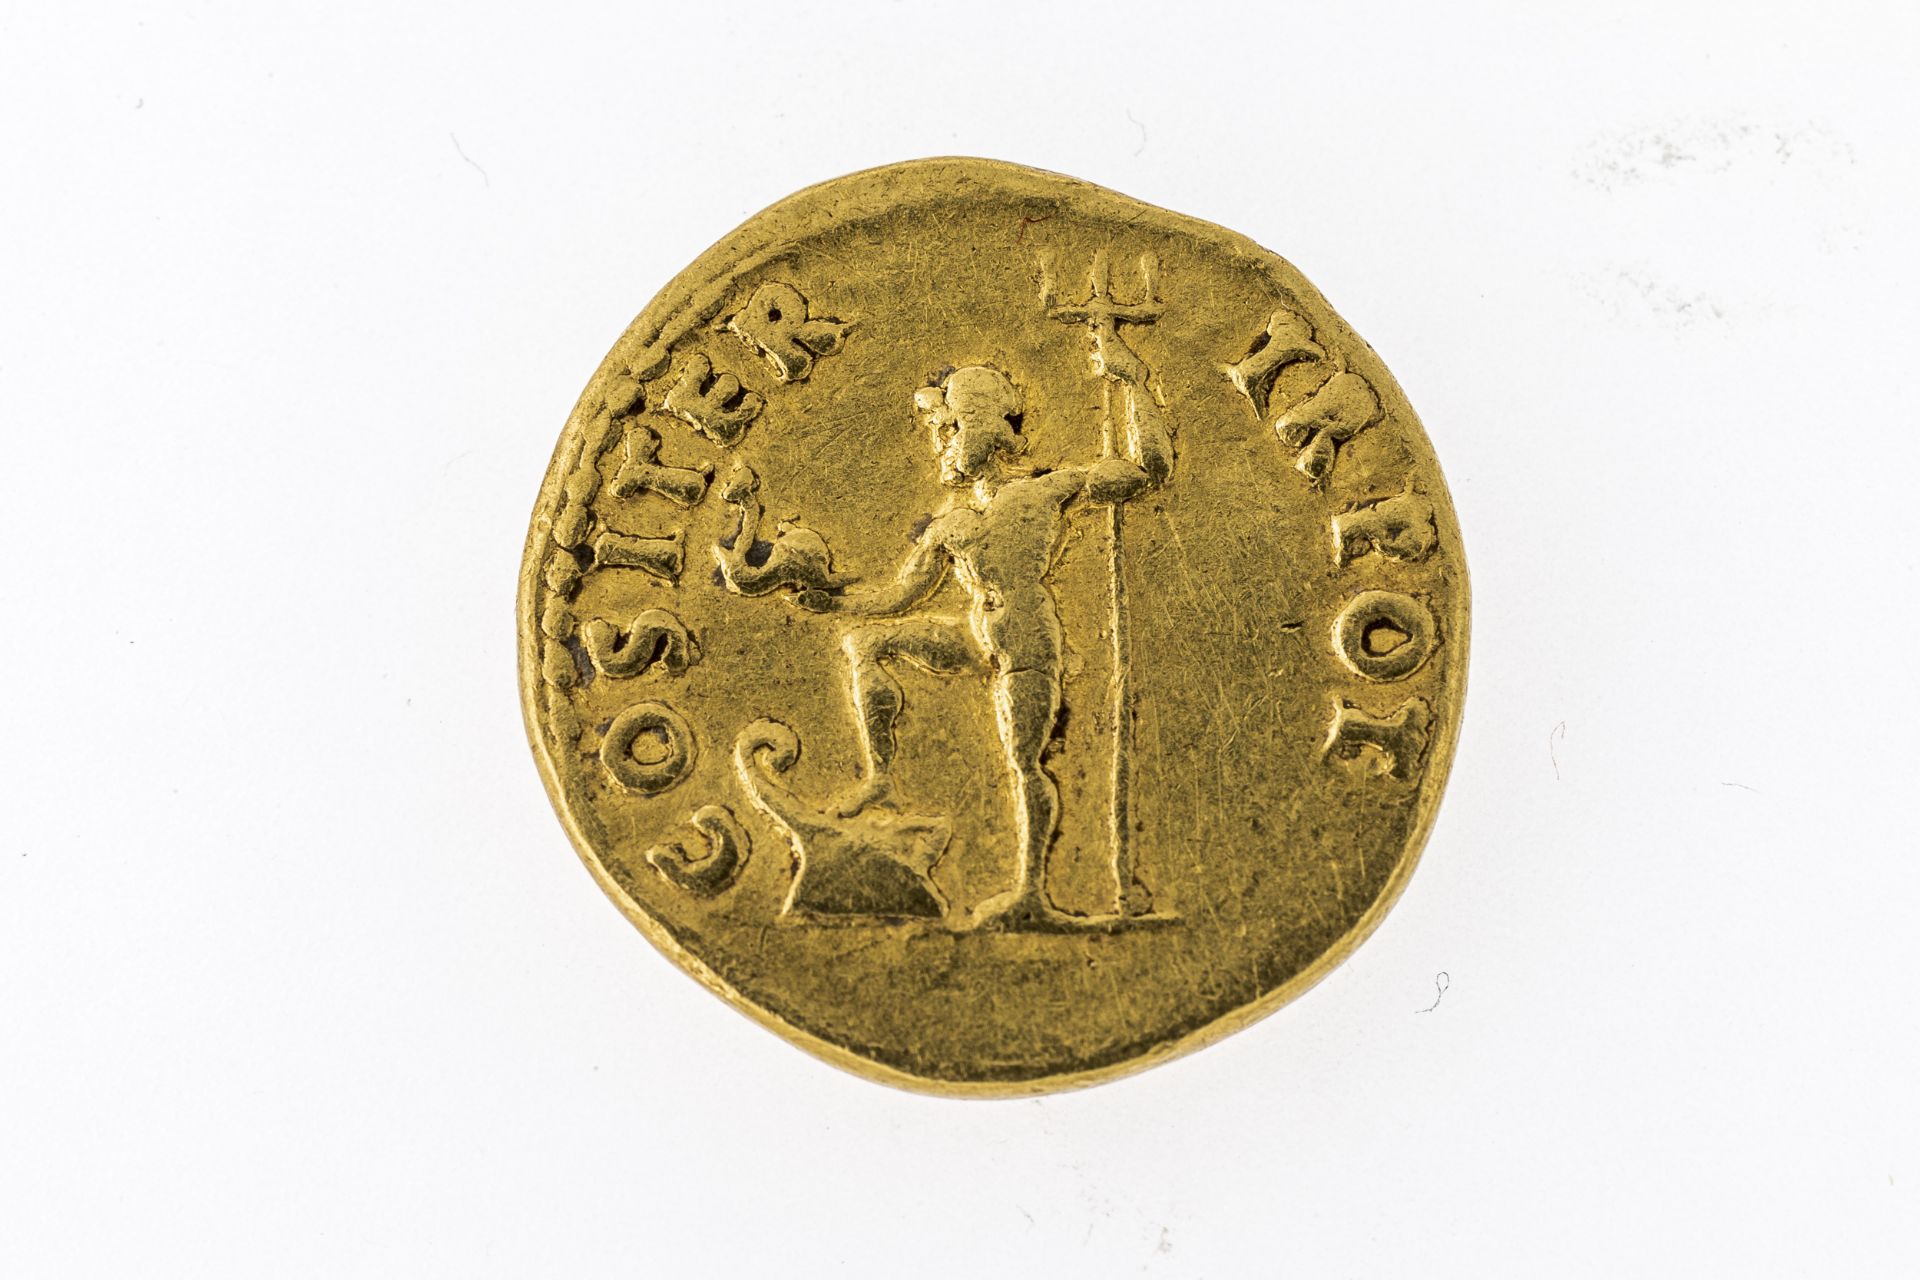 Vespasian - Image 2 of 2